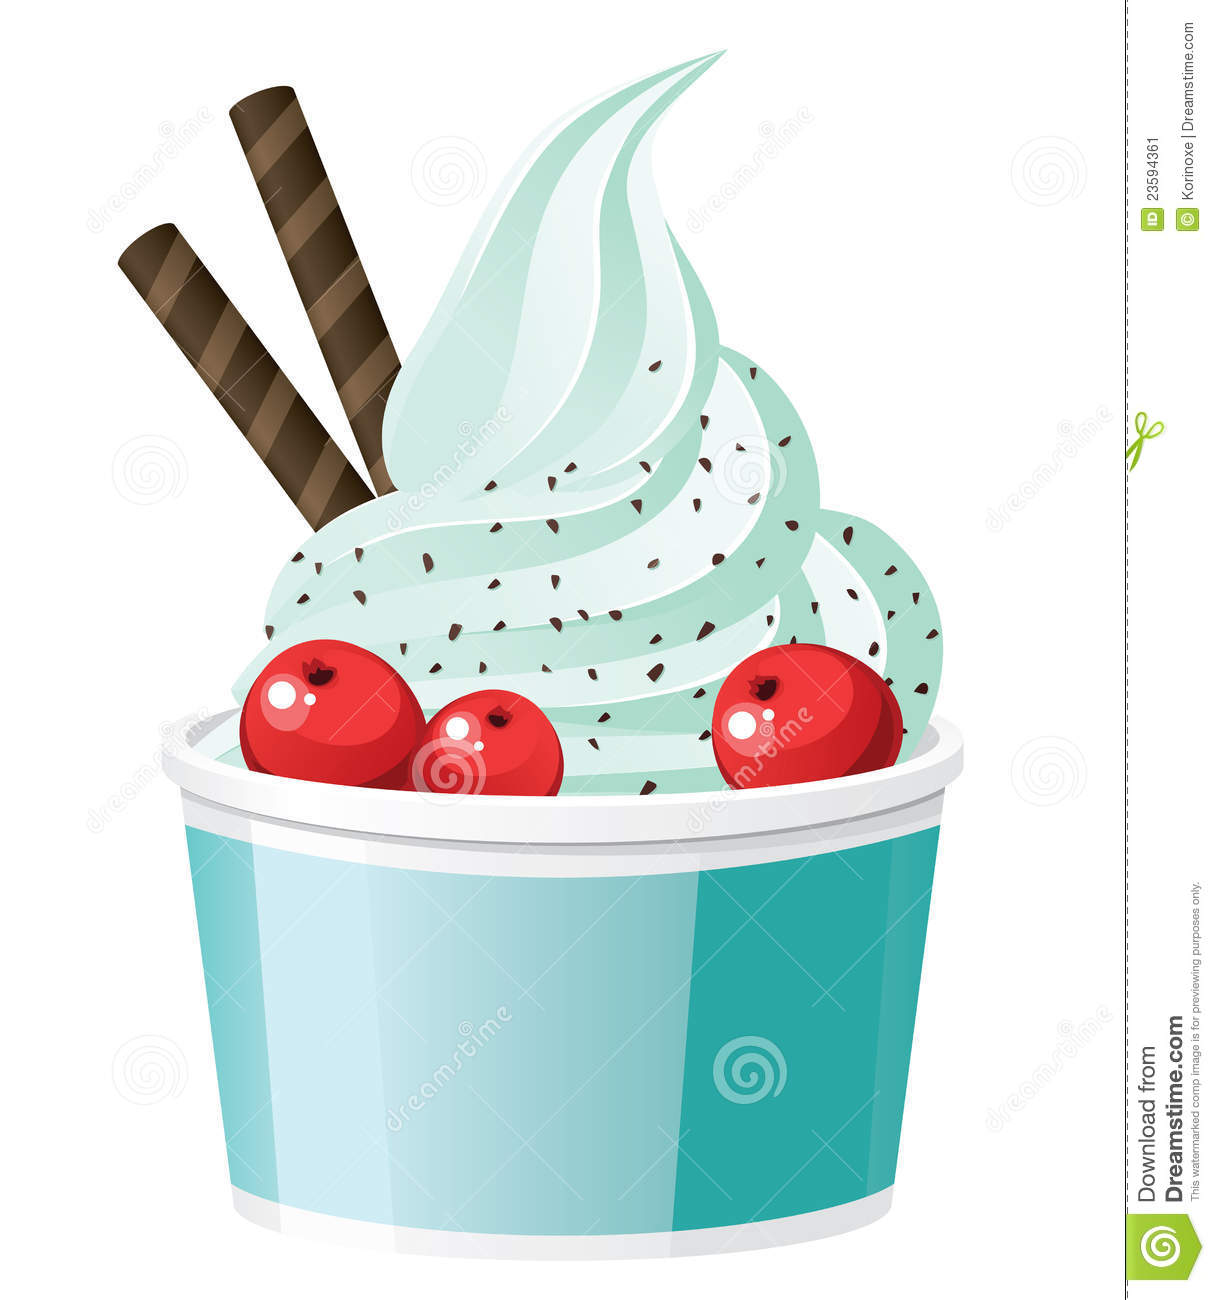 Frozen Yogurt Stock Illustrat